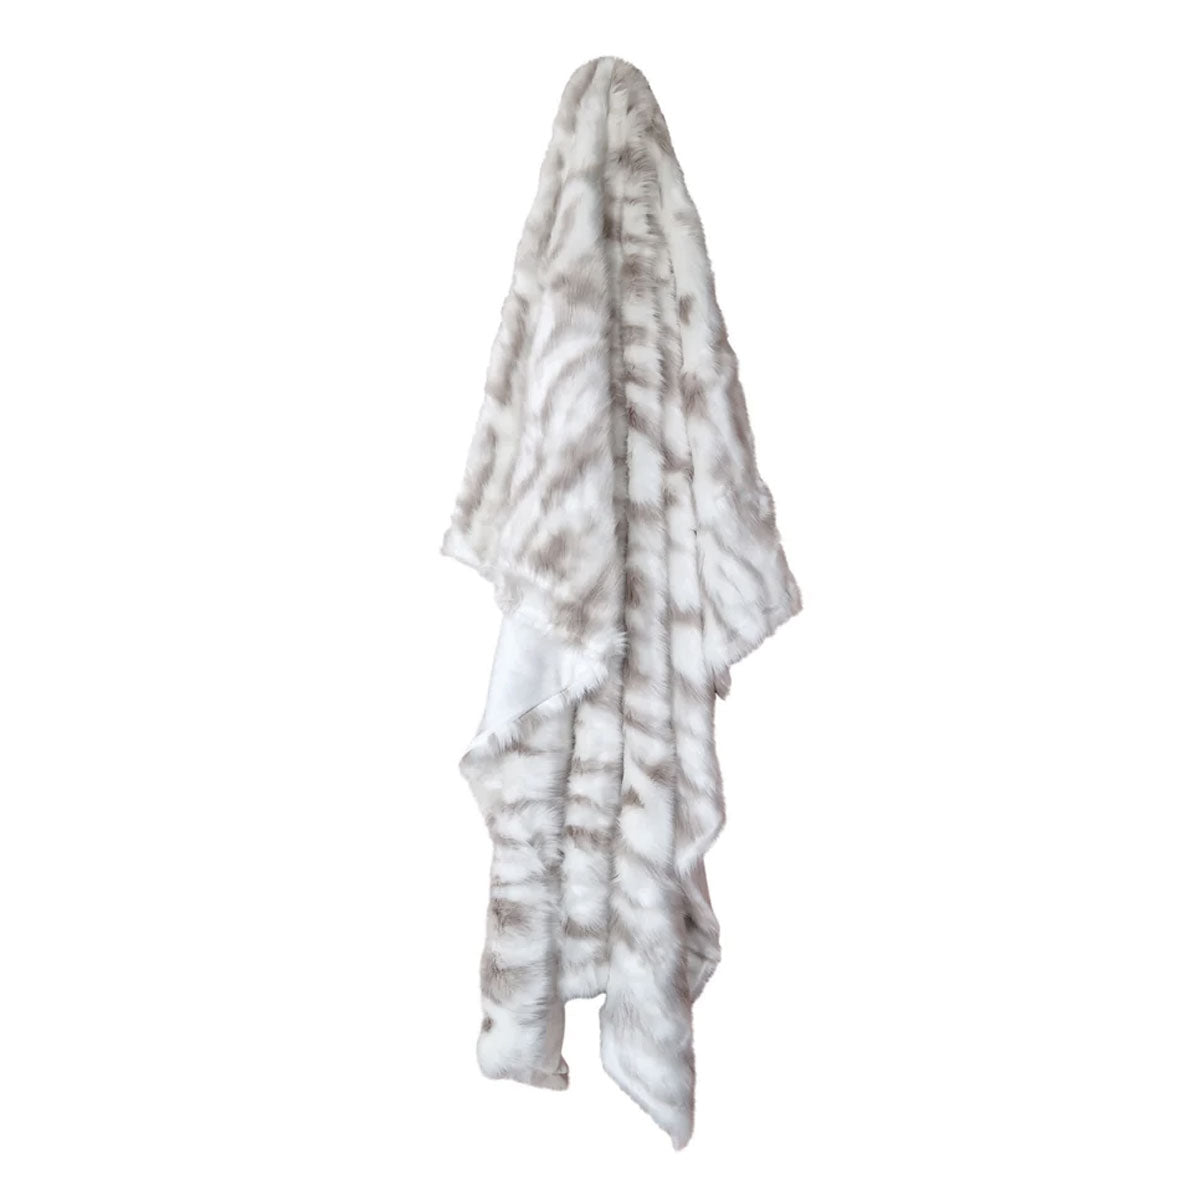 Warny Throw Soft Blanket Home Wild Cat Faux Fur Throw Rug 130 x 160cm - Ivory